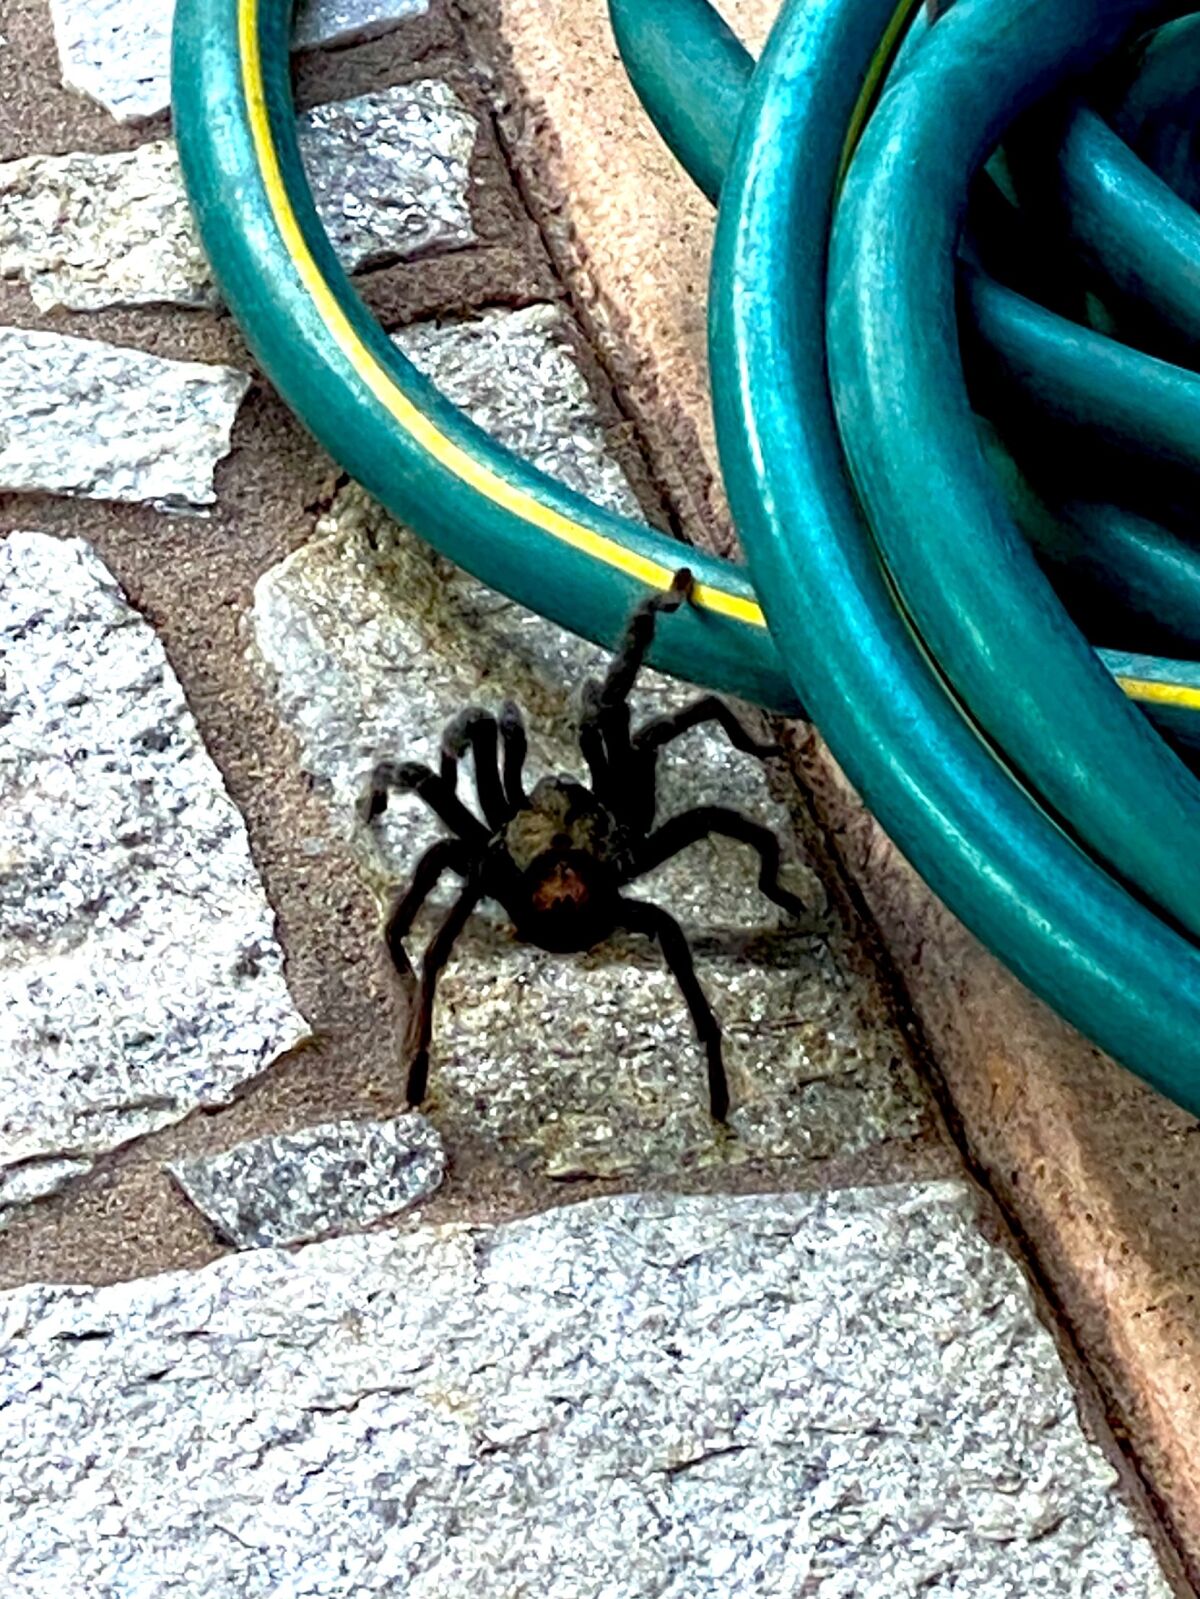 Jim Staylor sent a photo of a tarantula sighting in Parkside Arbolitos. The tarantula seems to be guarding the garden hose. 